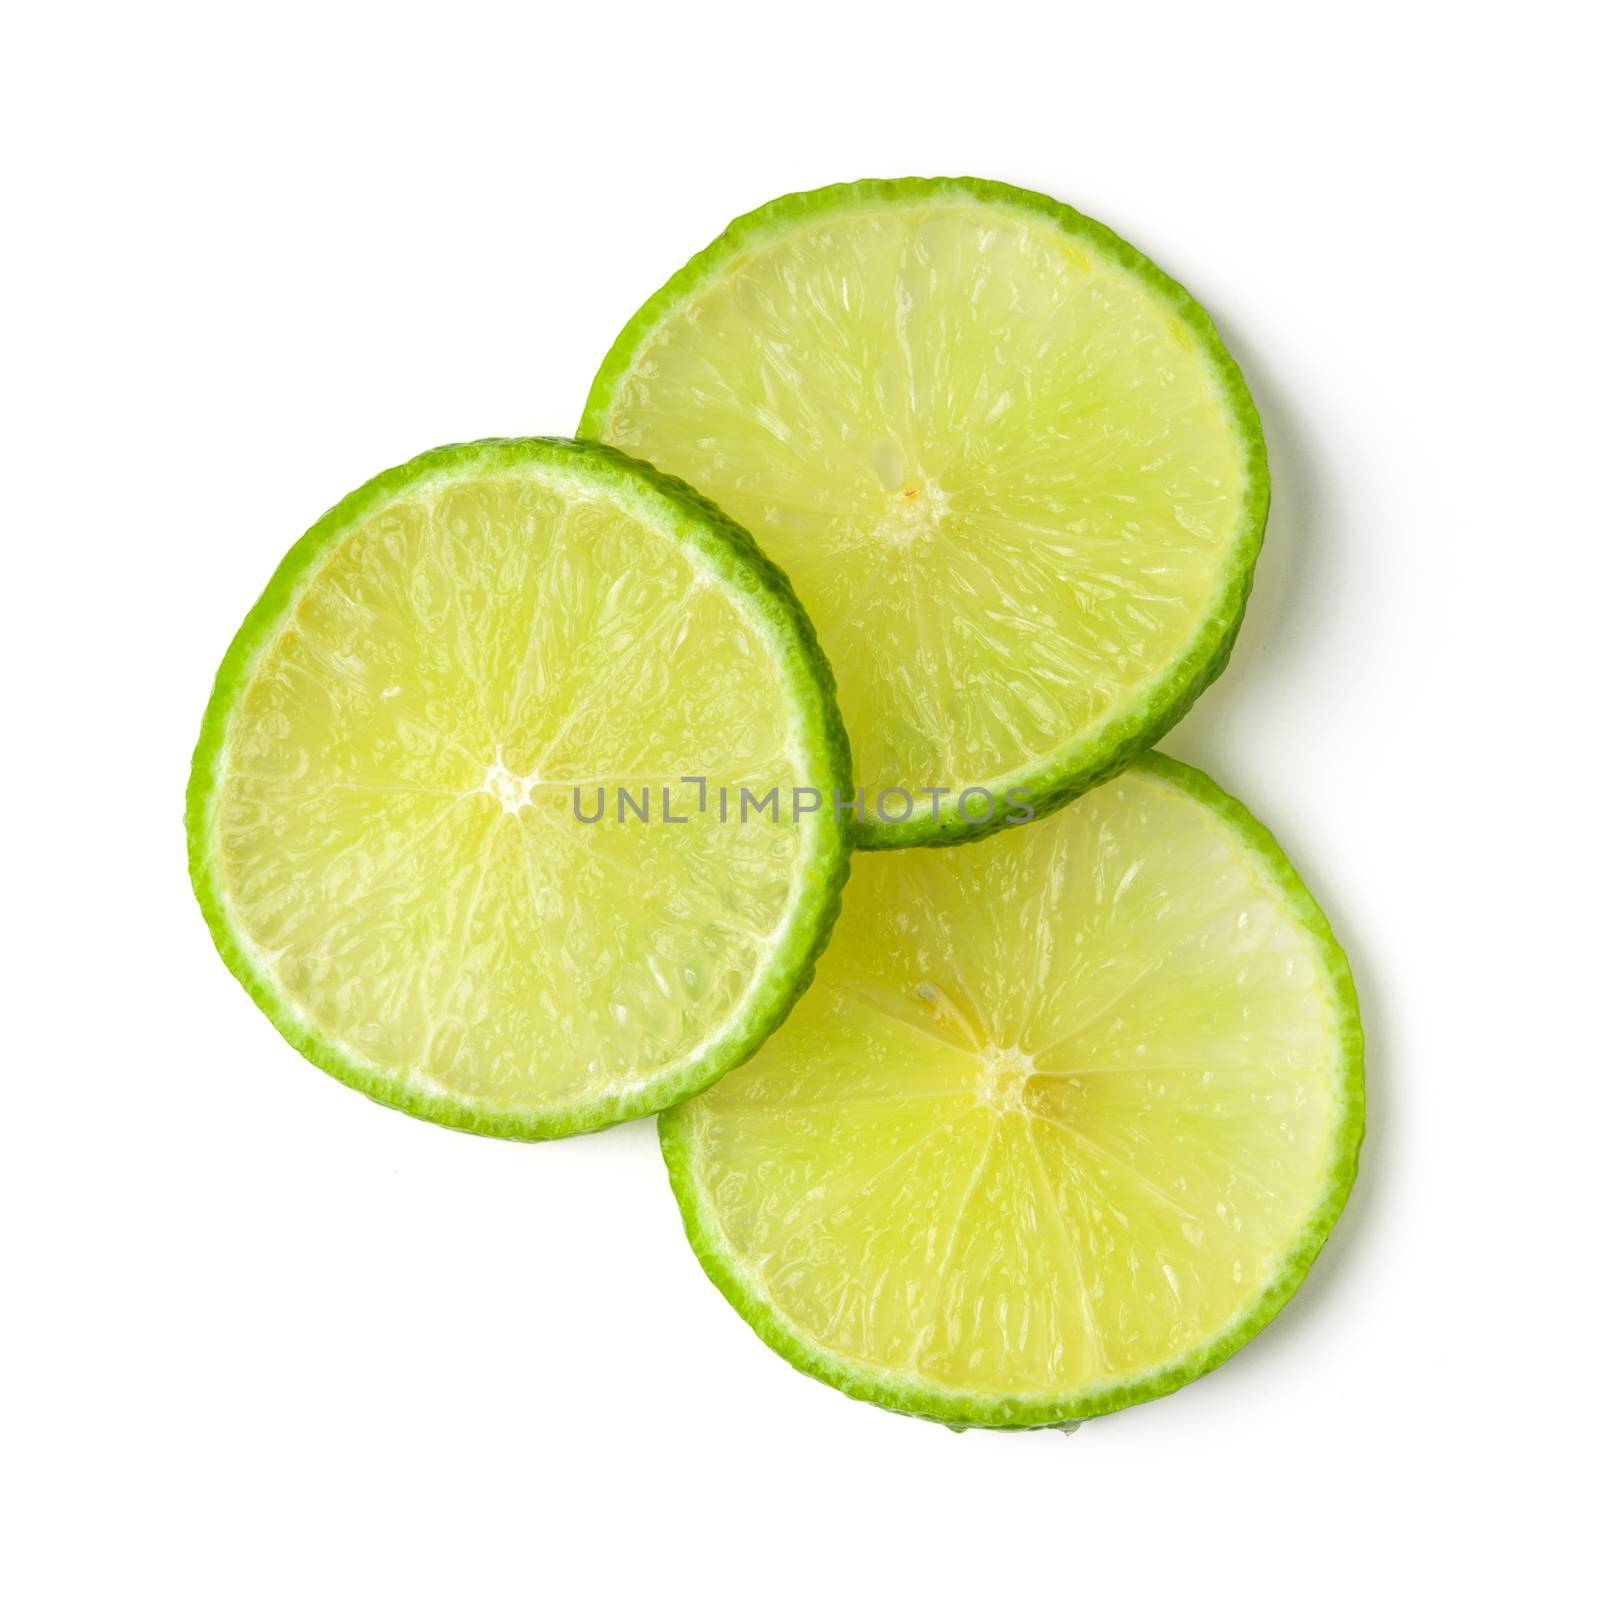 slice lime